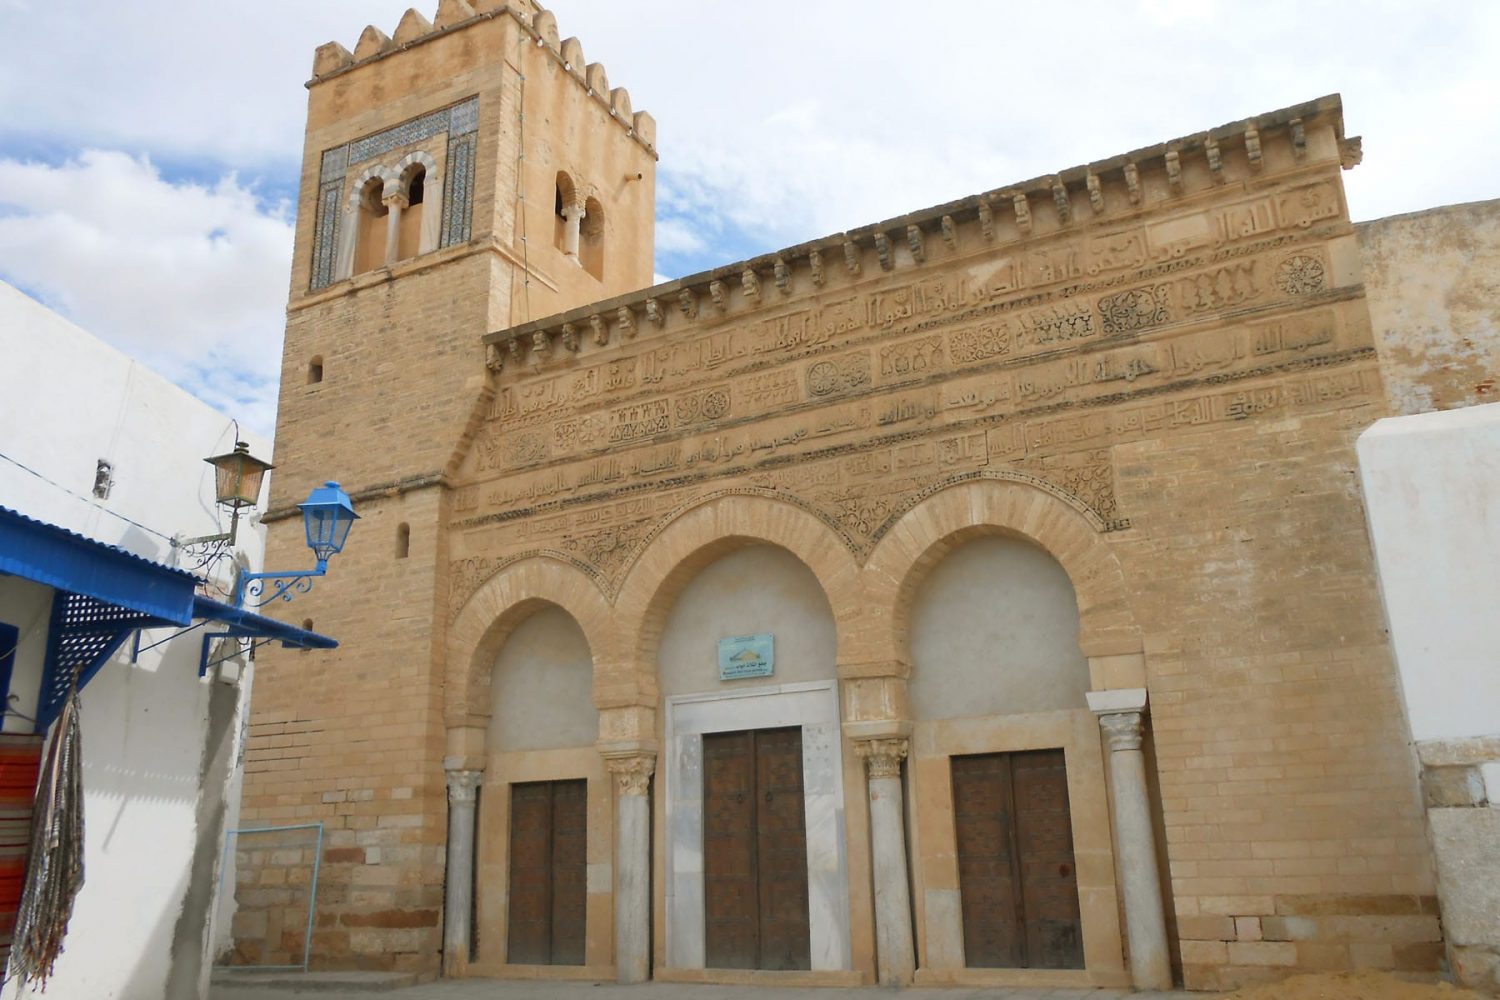 Cultural trip: Kairouan three doors mosque